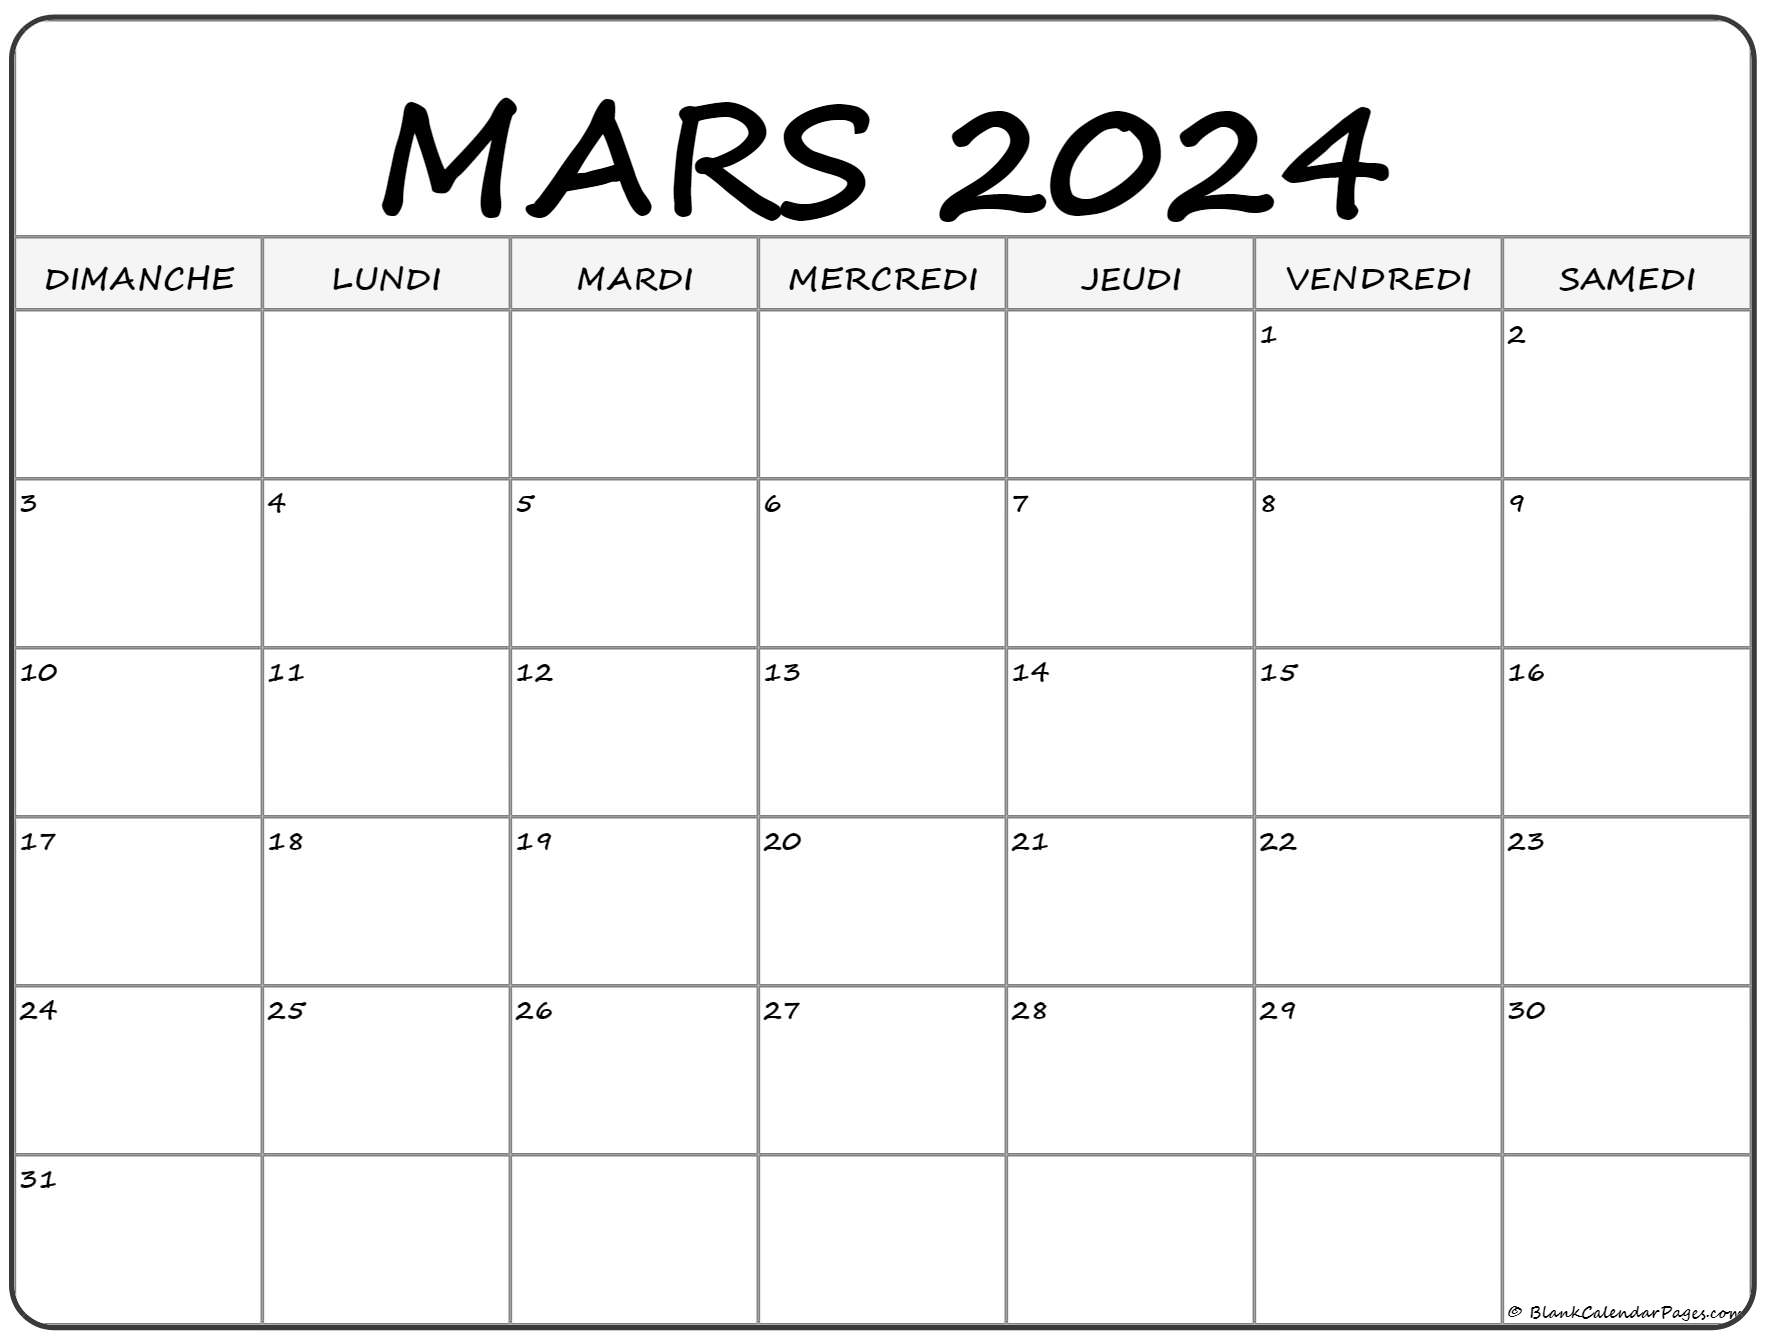 Mars 2022 Calendrier mars 2022 calendrier imprimable | Calendrier gratuit